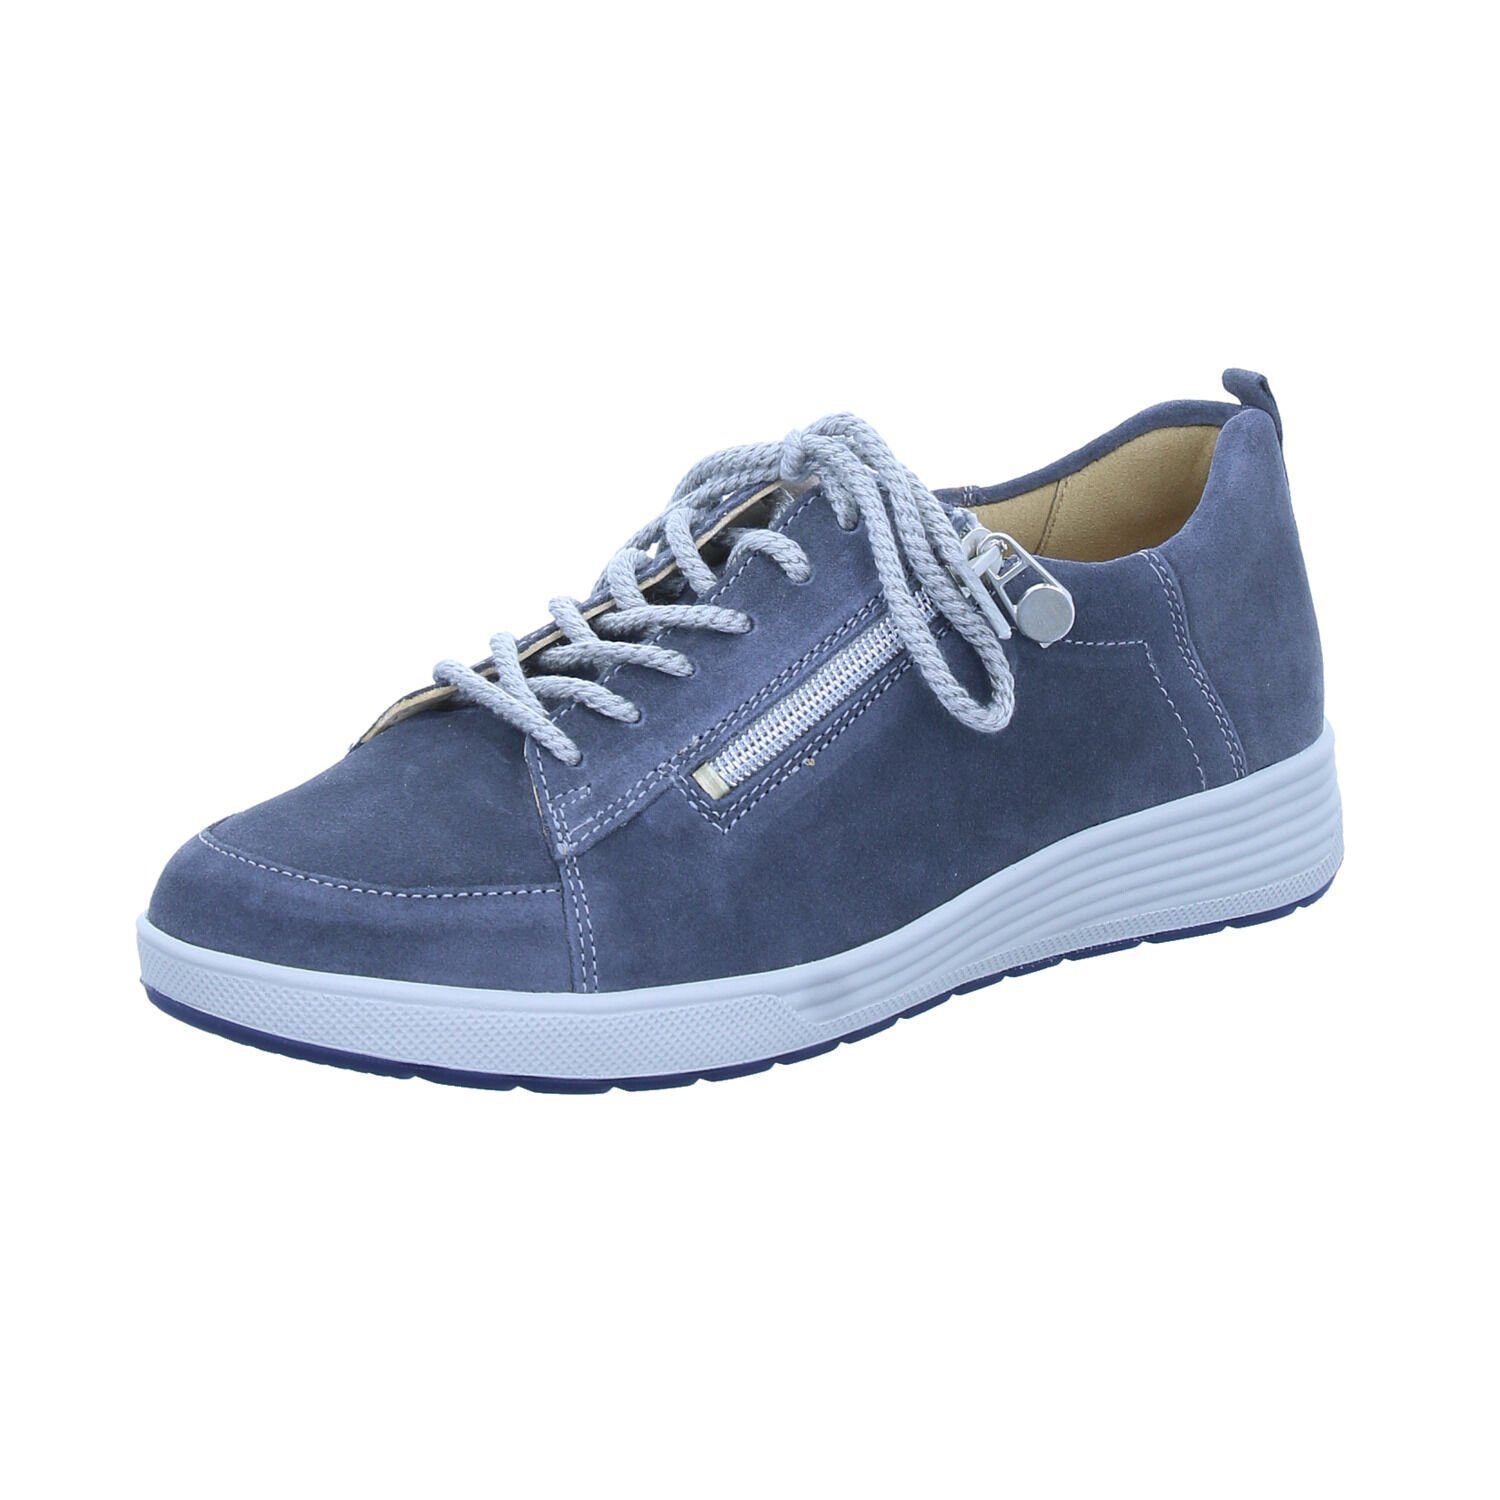 Ganter Sneaker grey/blue